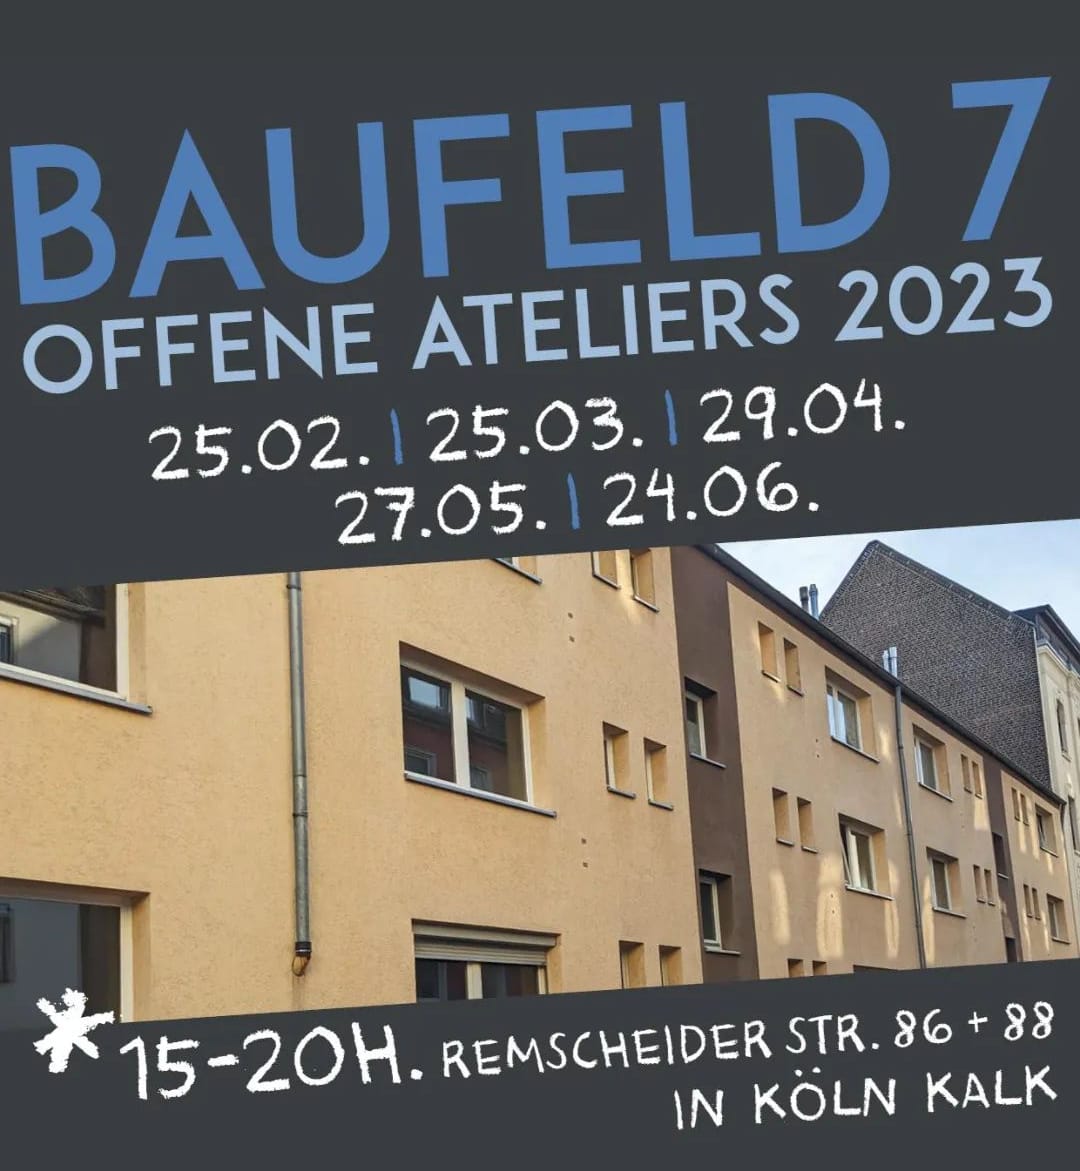 Baufeld7